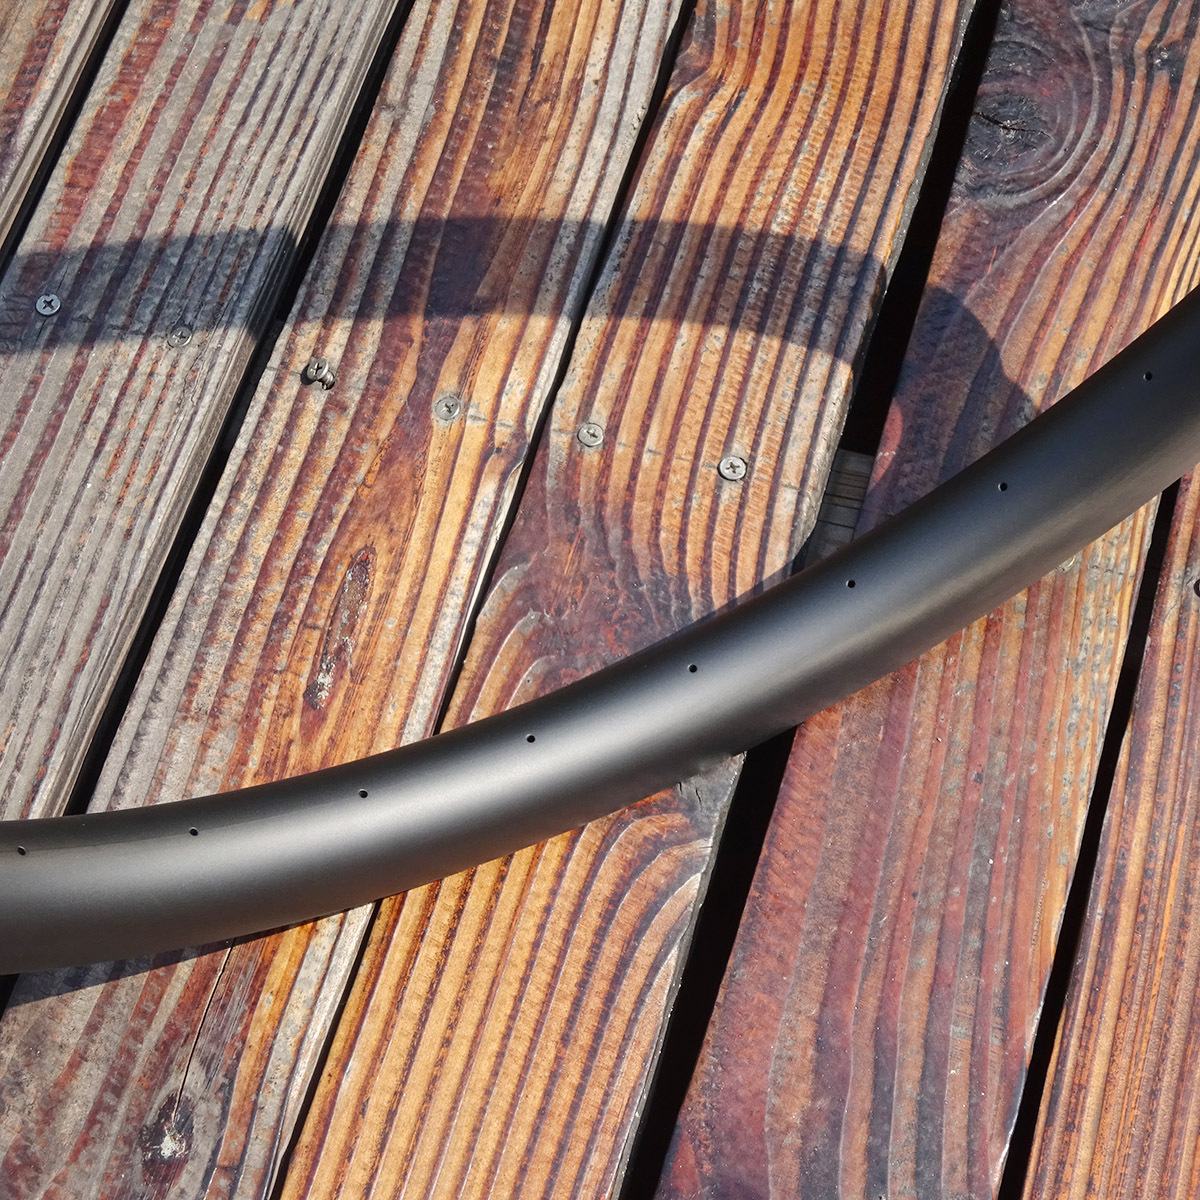 26er Hand-built Endro Downhill carbon fiber wheelset rims 40mm wide TMC632 DH Hookless carbon all mountain bike rims all mountain  40mm wide 26er